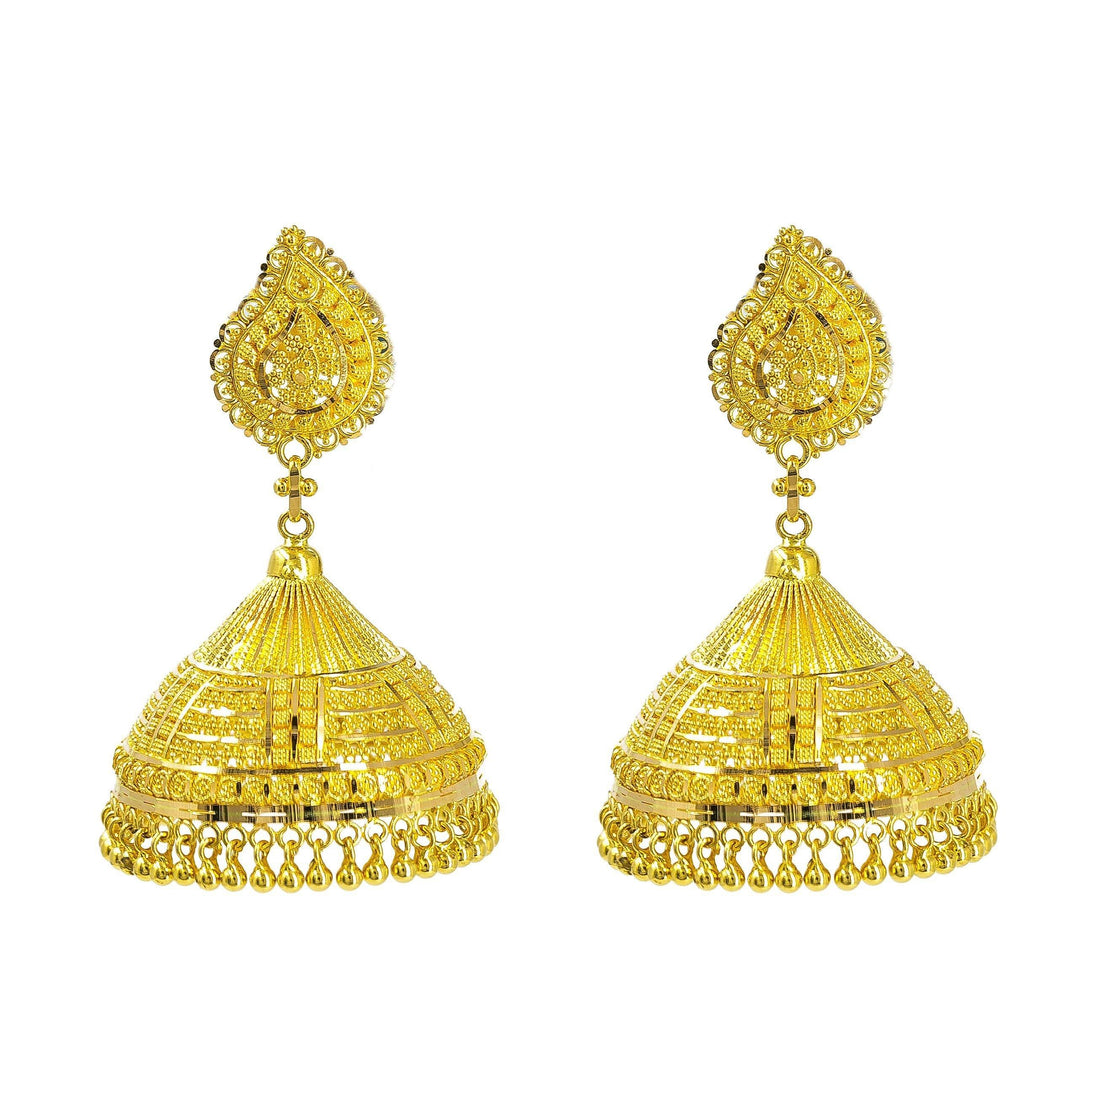 jhumka design gold with price 2023 // 5 gram gold earrings designs with  price 2023 #earrings - YouTube